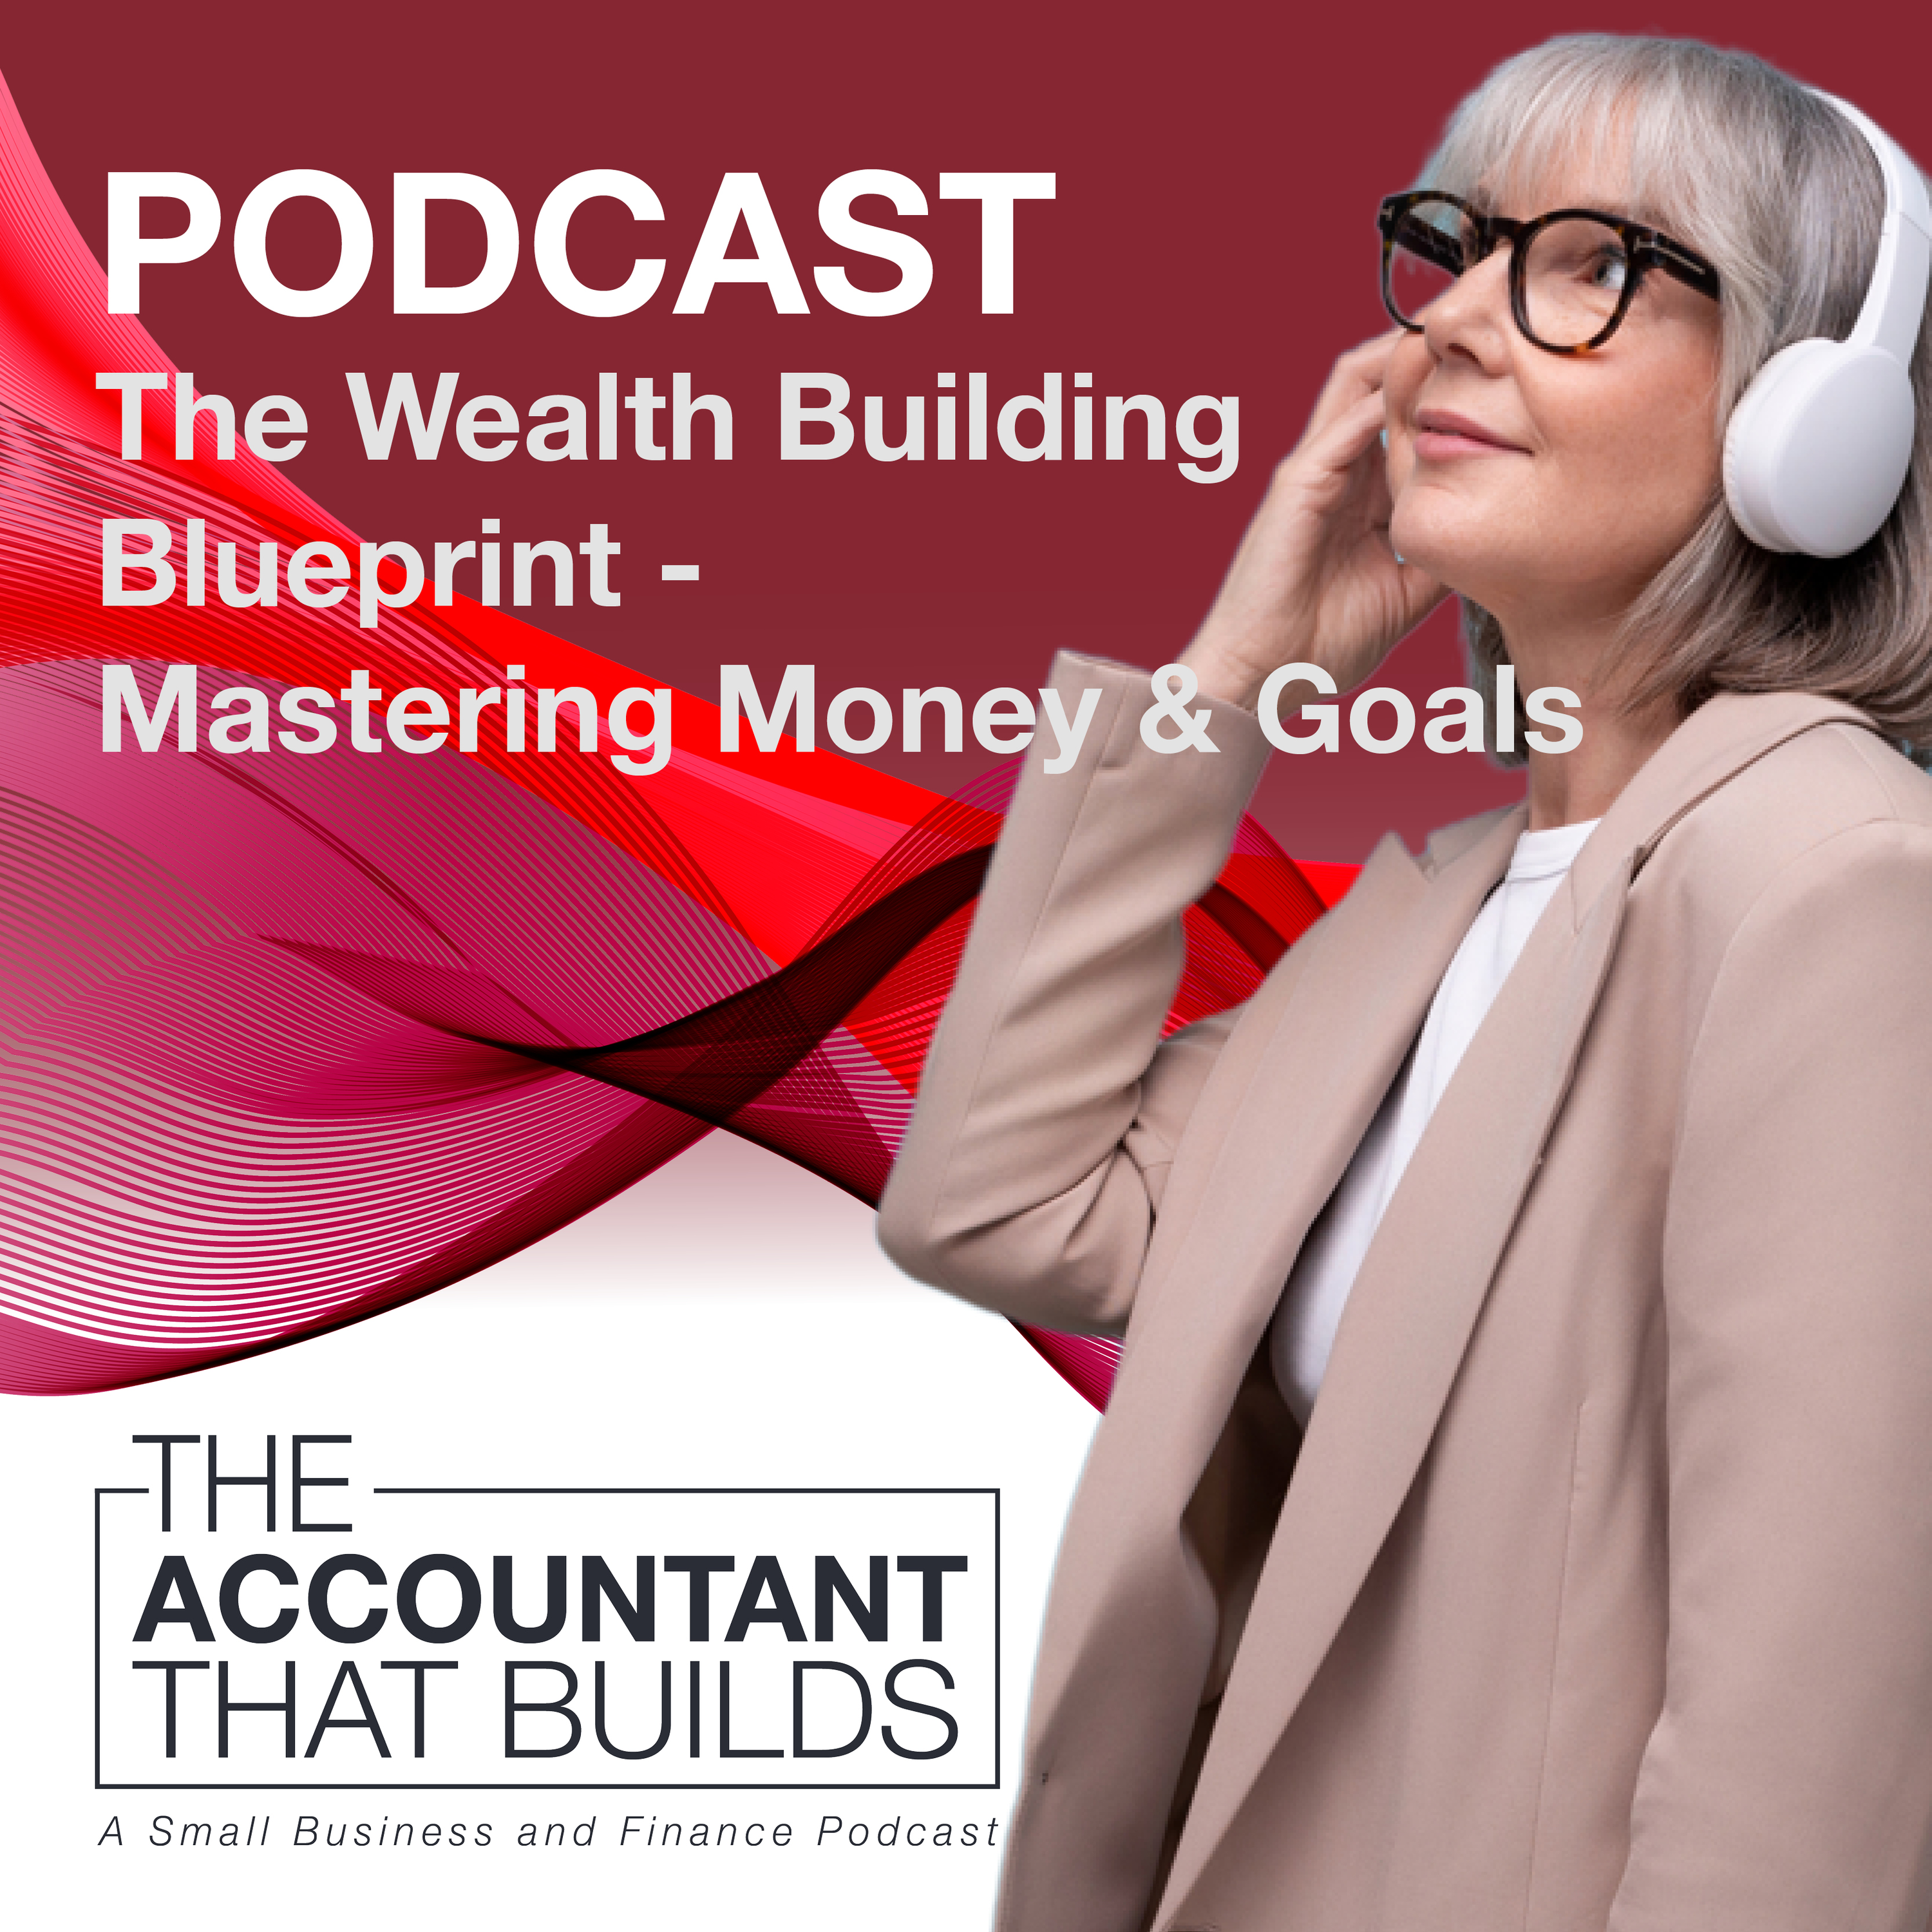 The Wealth Building Blueprint - Mastering Money & Goals